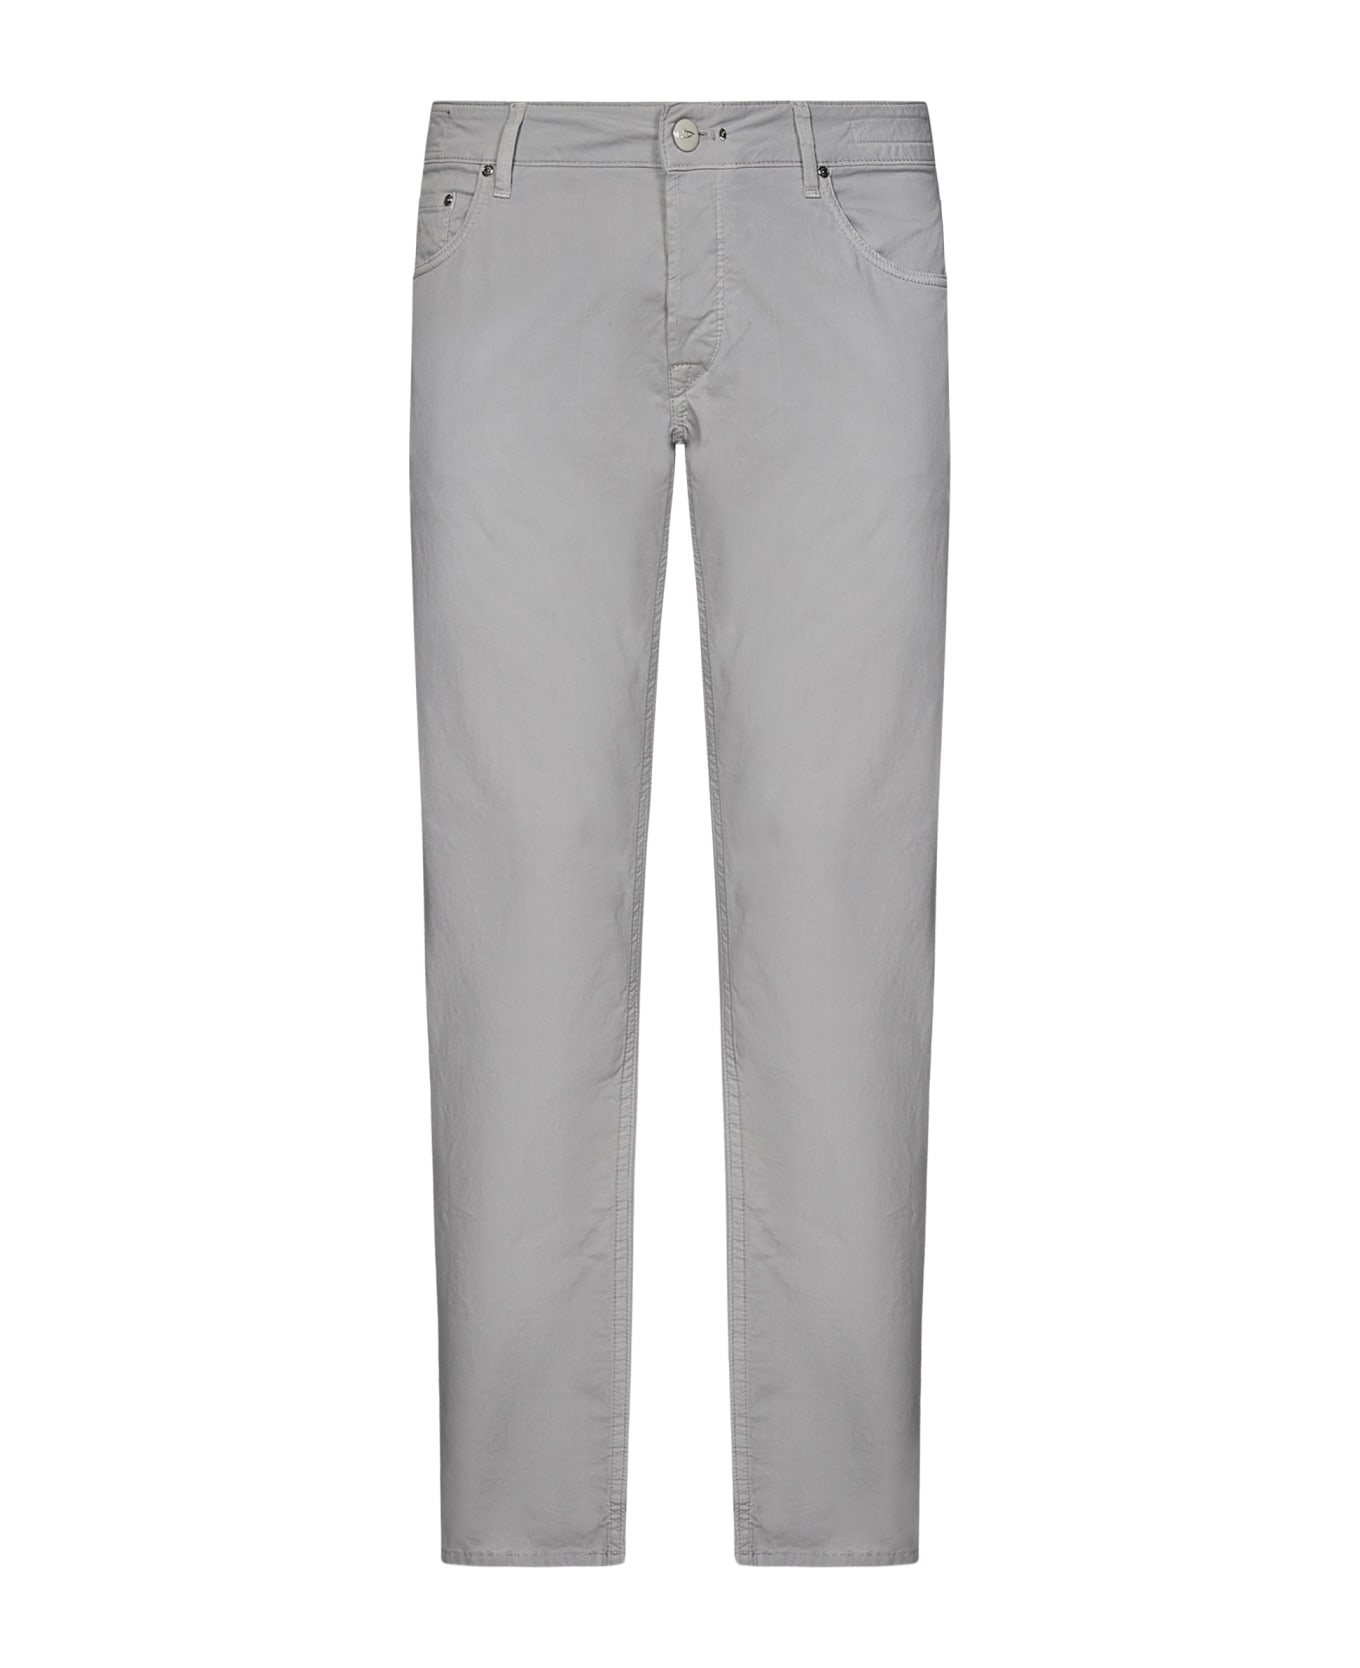 Hand Picked Handpicked Orvieto Trousers - Grey